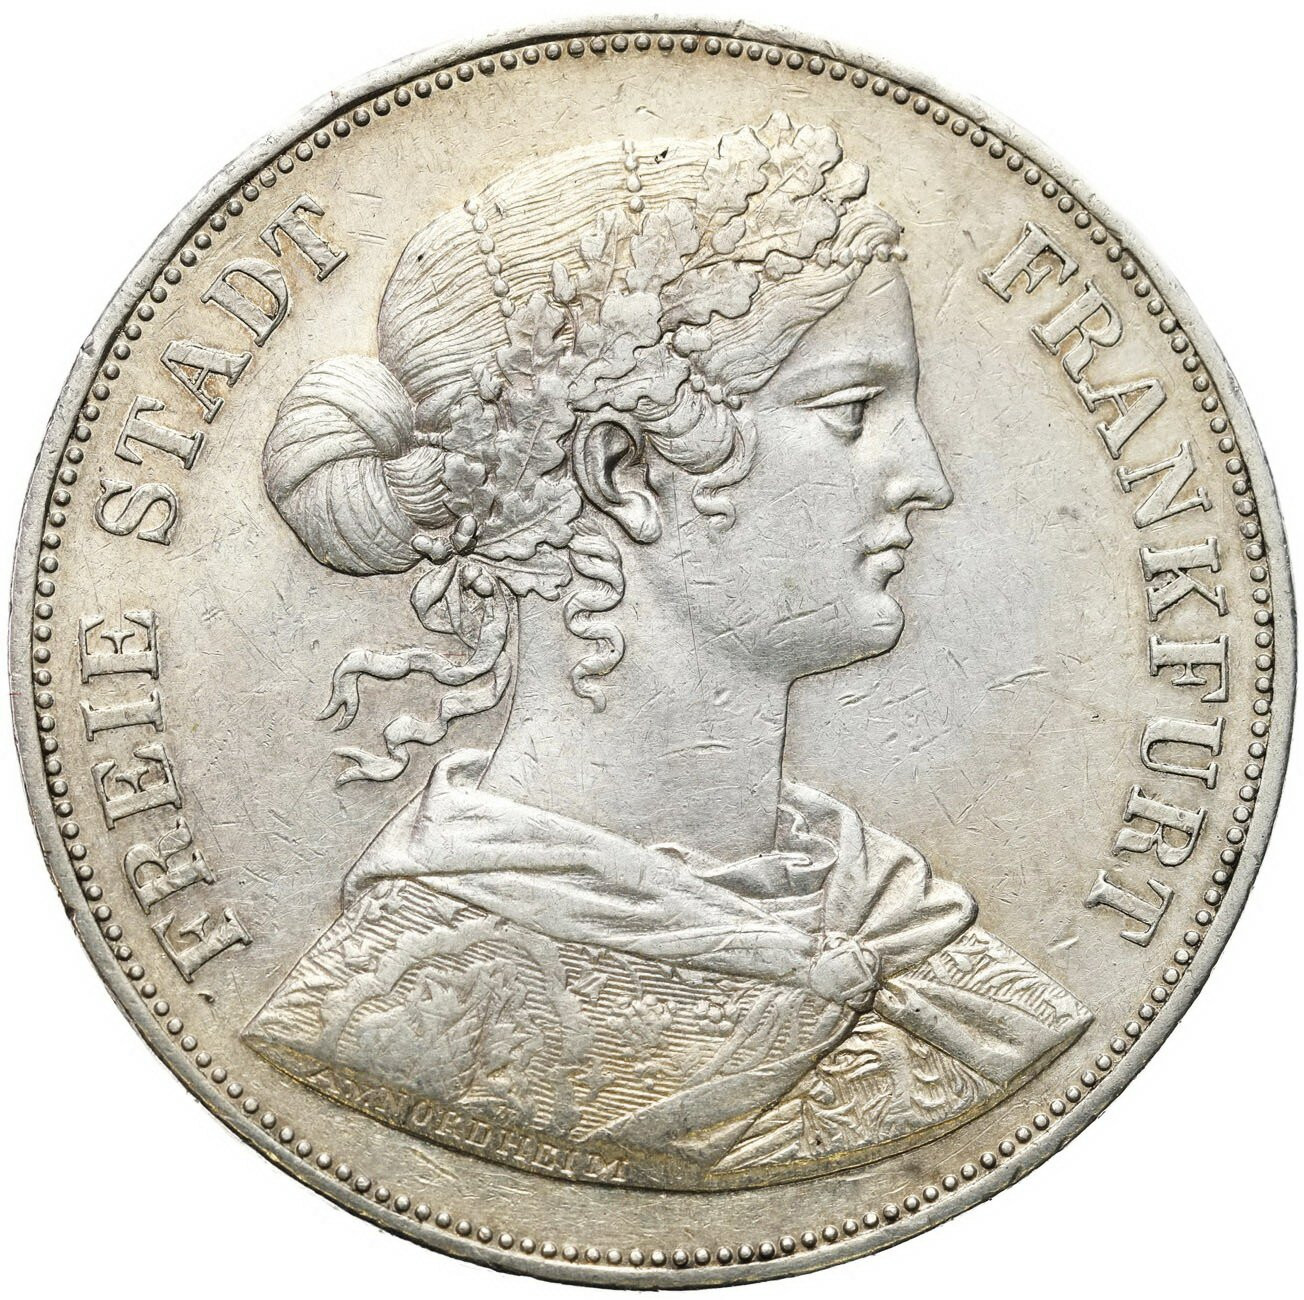 Niemcy, Frankfurt. Dwutalar = 3 1/2 guldena 1861 